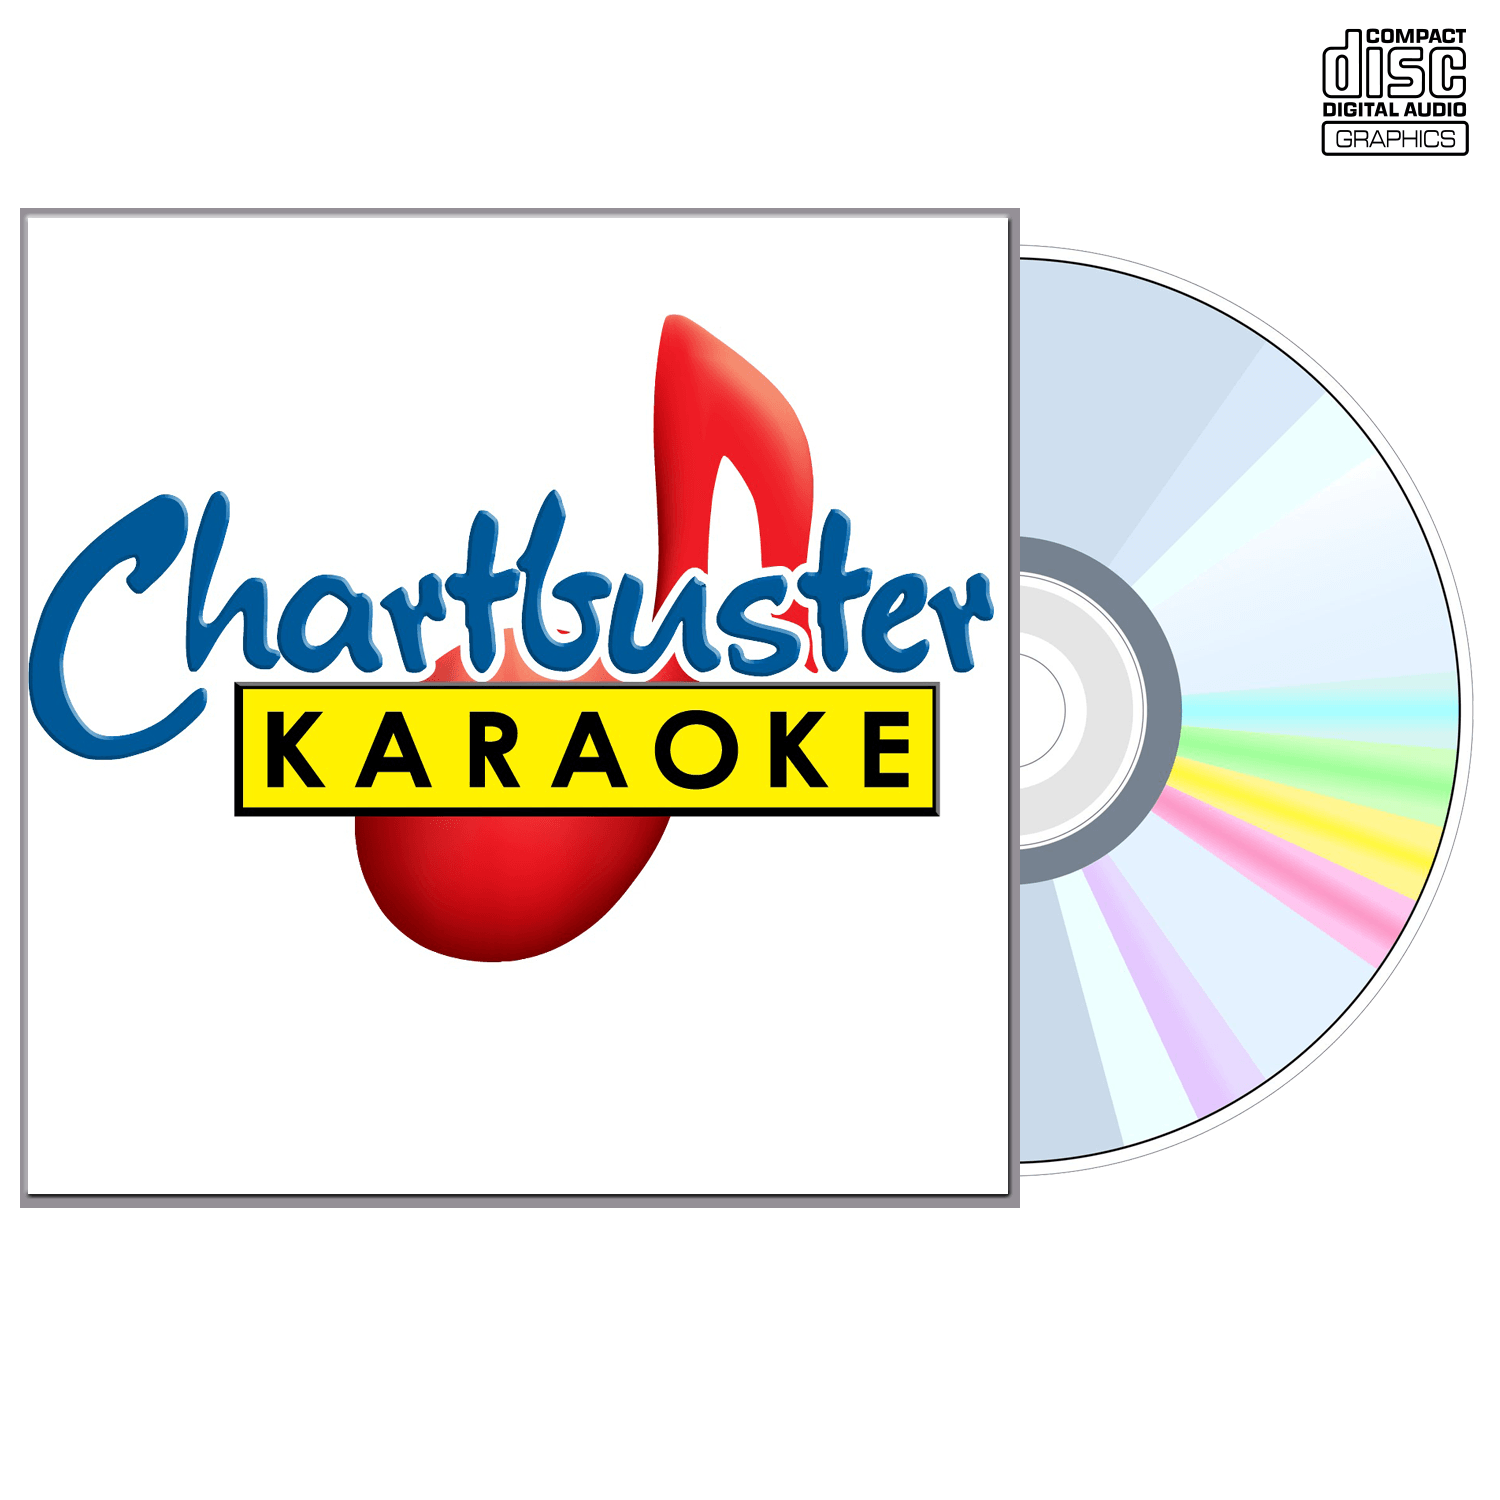 Three Dog Night - CD+G - Chartbuster Karaoke - Karaoke Home Entertainment